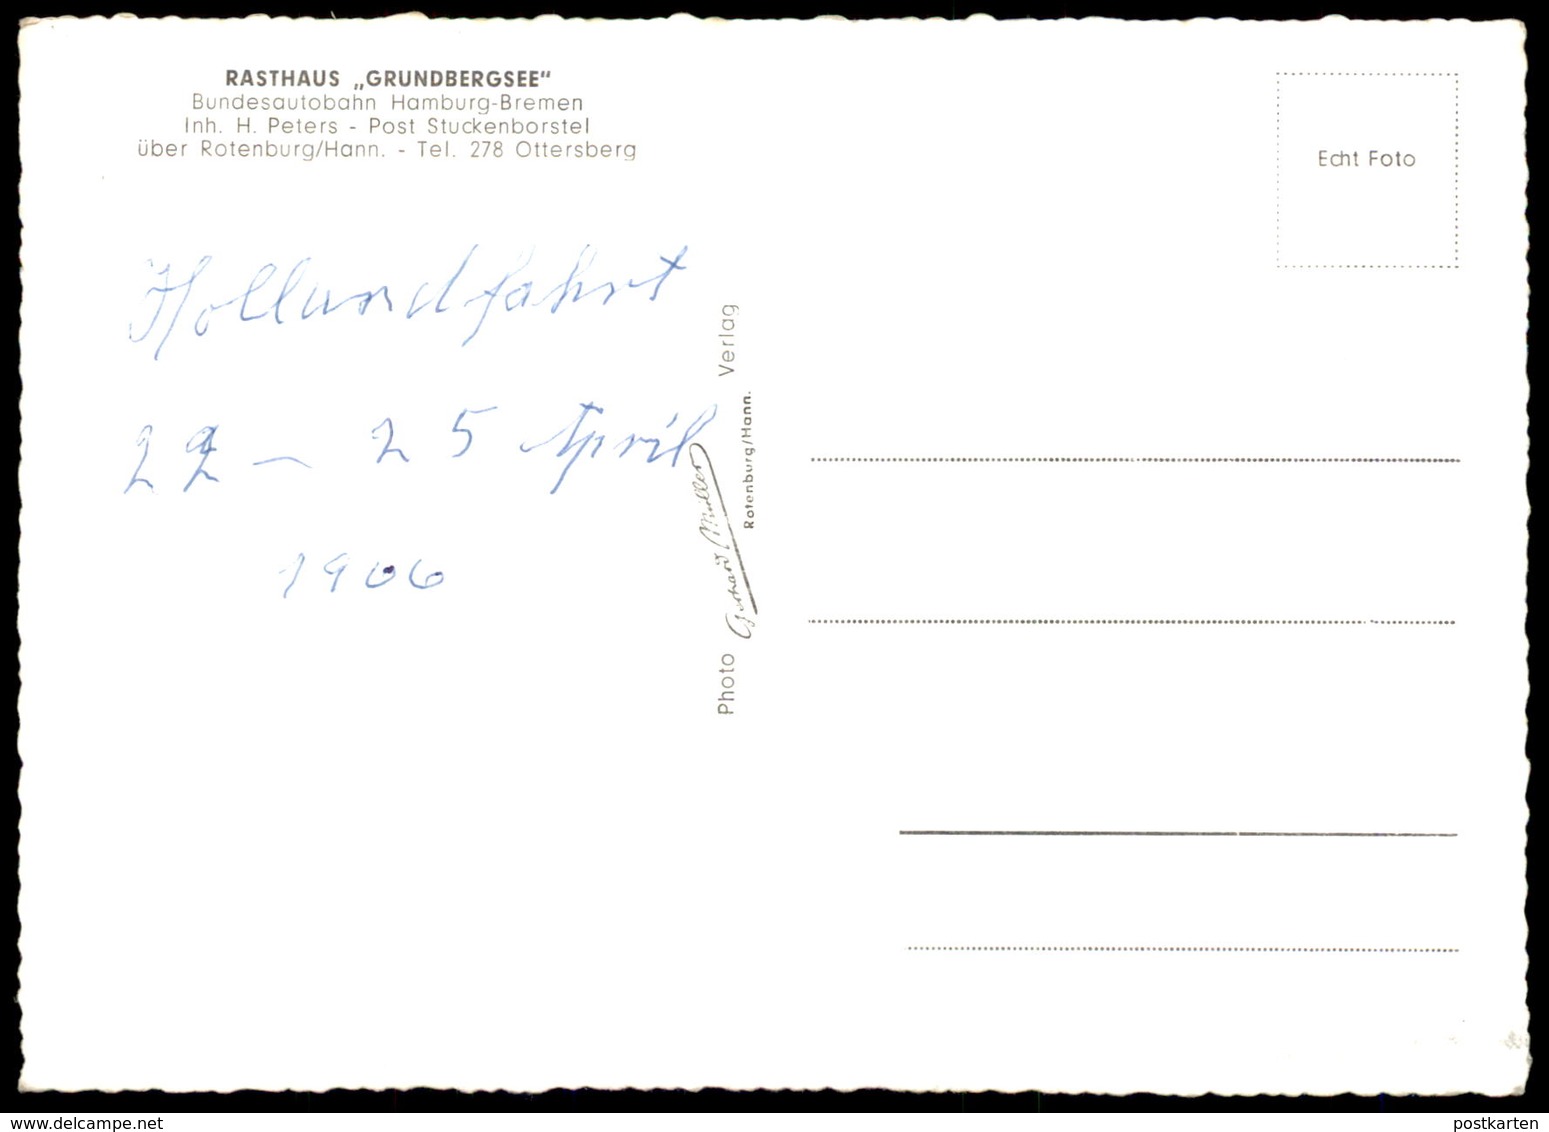 ÄLTERE POSTKARTE AUTOBAHN RASTSTÄTTE GRUNDBERGSEE BAB HAMBURG - BREMEN A1 SOTTRUM OTTERSBERG Ansichtskarte Cpa Postcard - Rotenburg (Wümme)